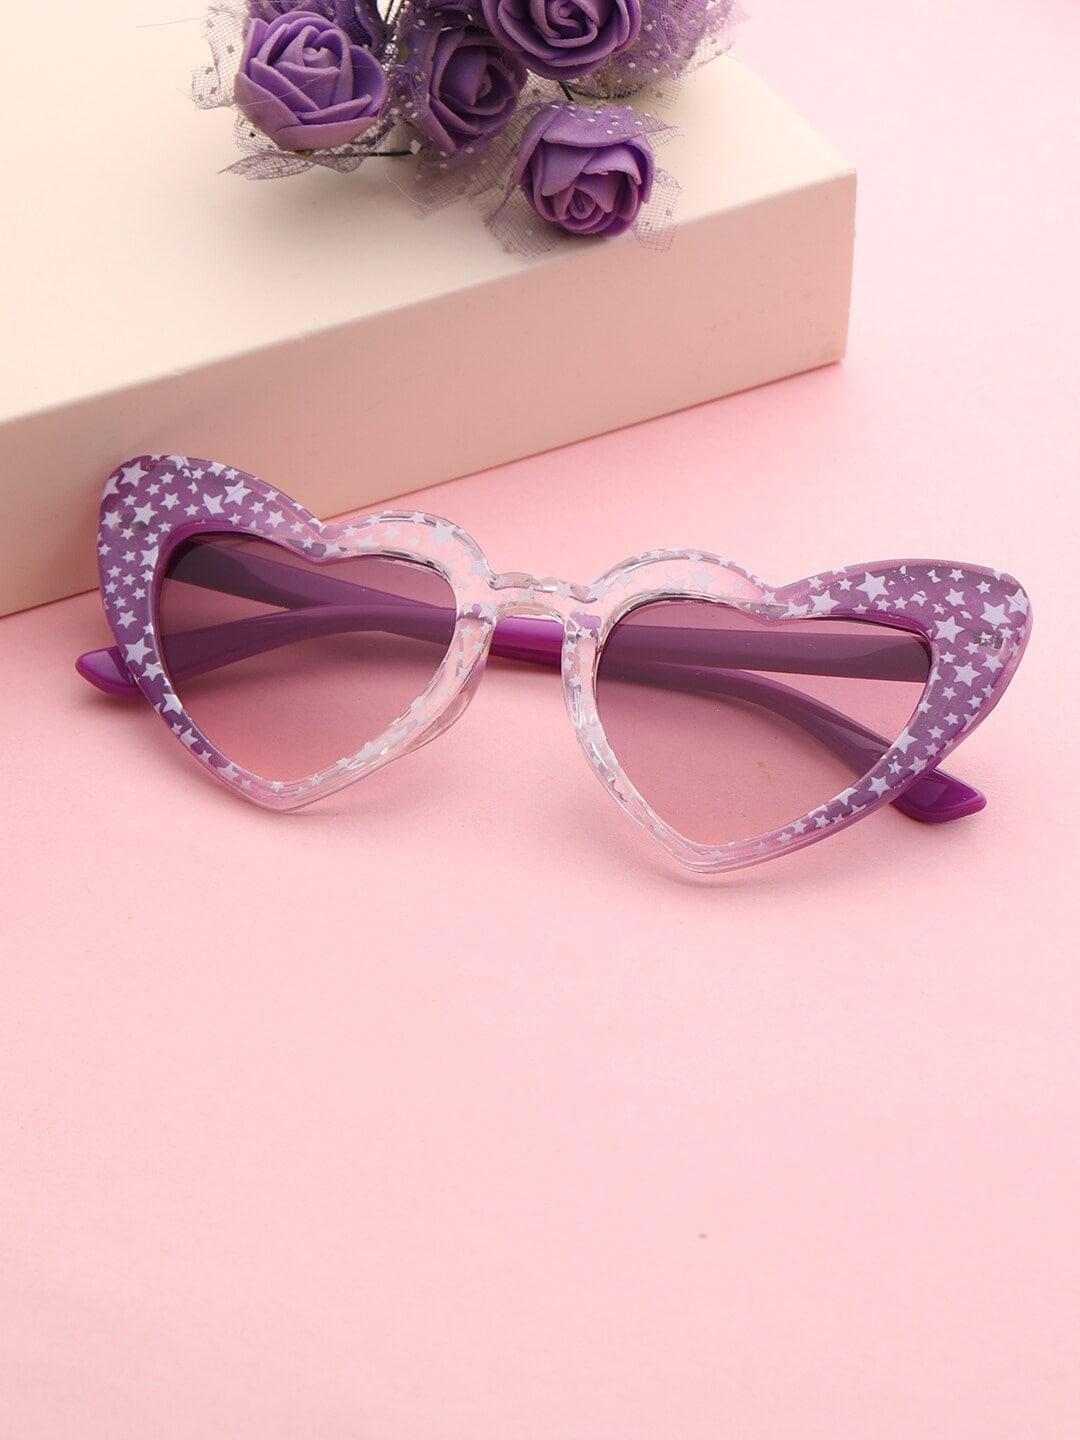 passion-petals-girls-heart-sunglasses-polarised-and-uv-lens-11-10purplesunglasses